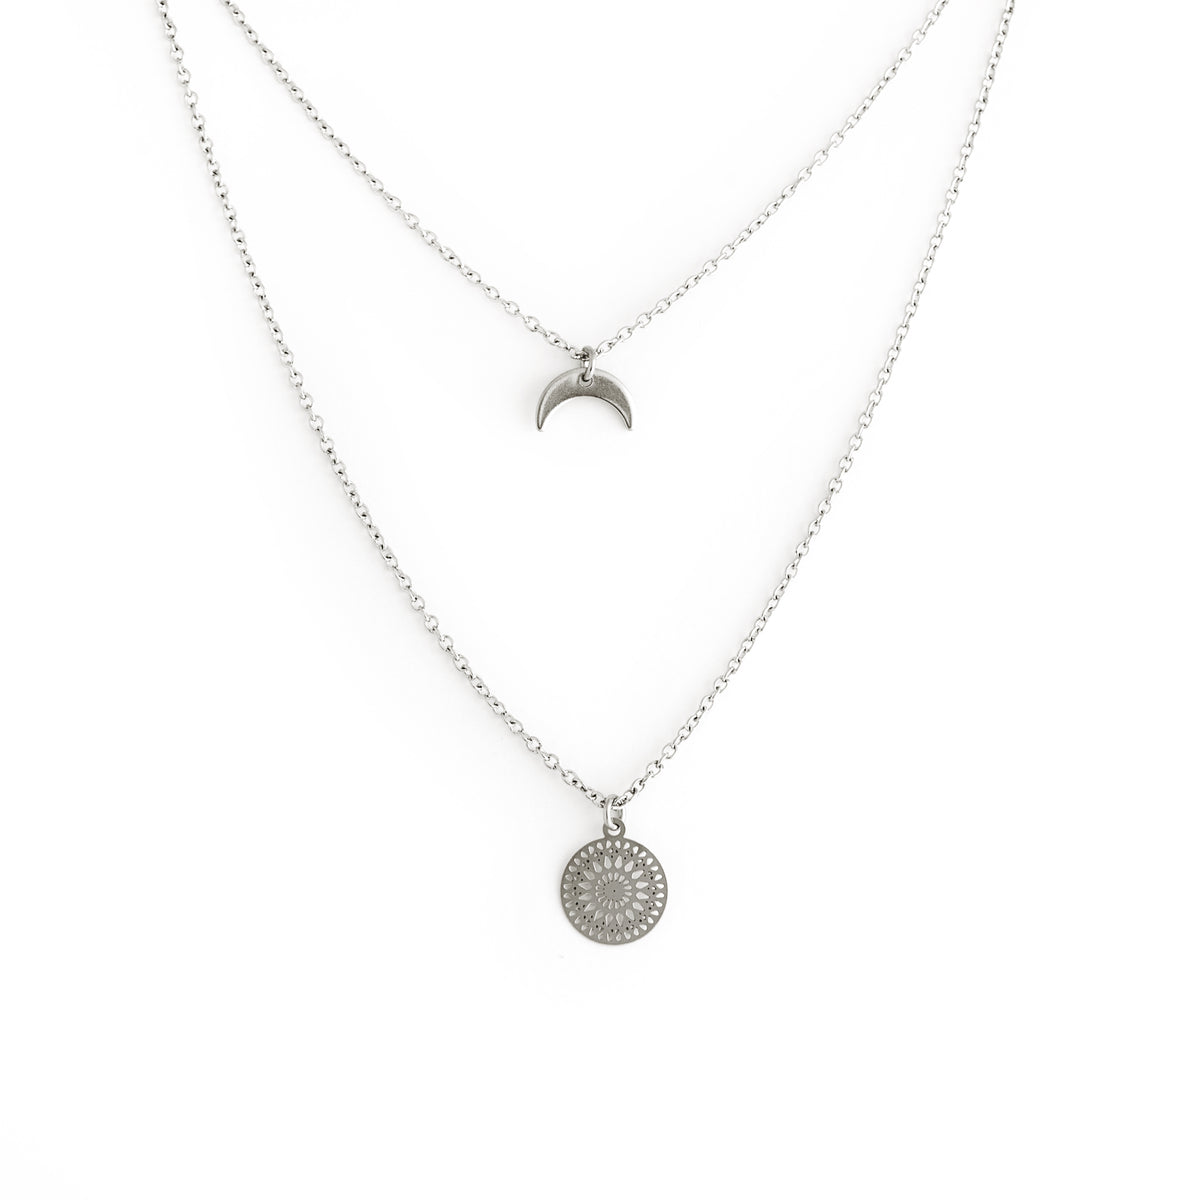 Mandala Necklace - Silver